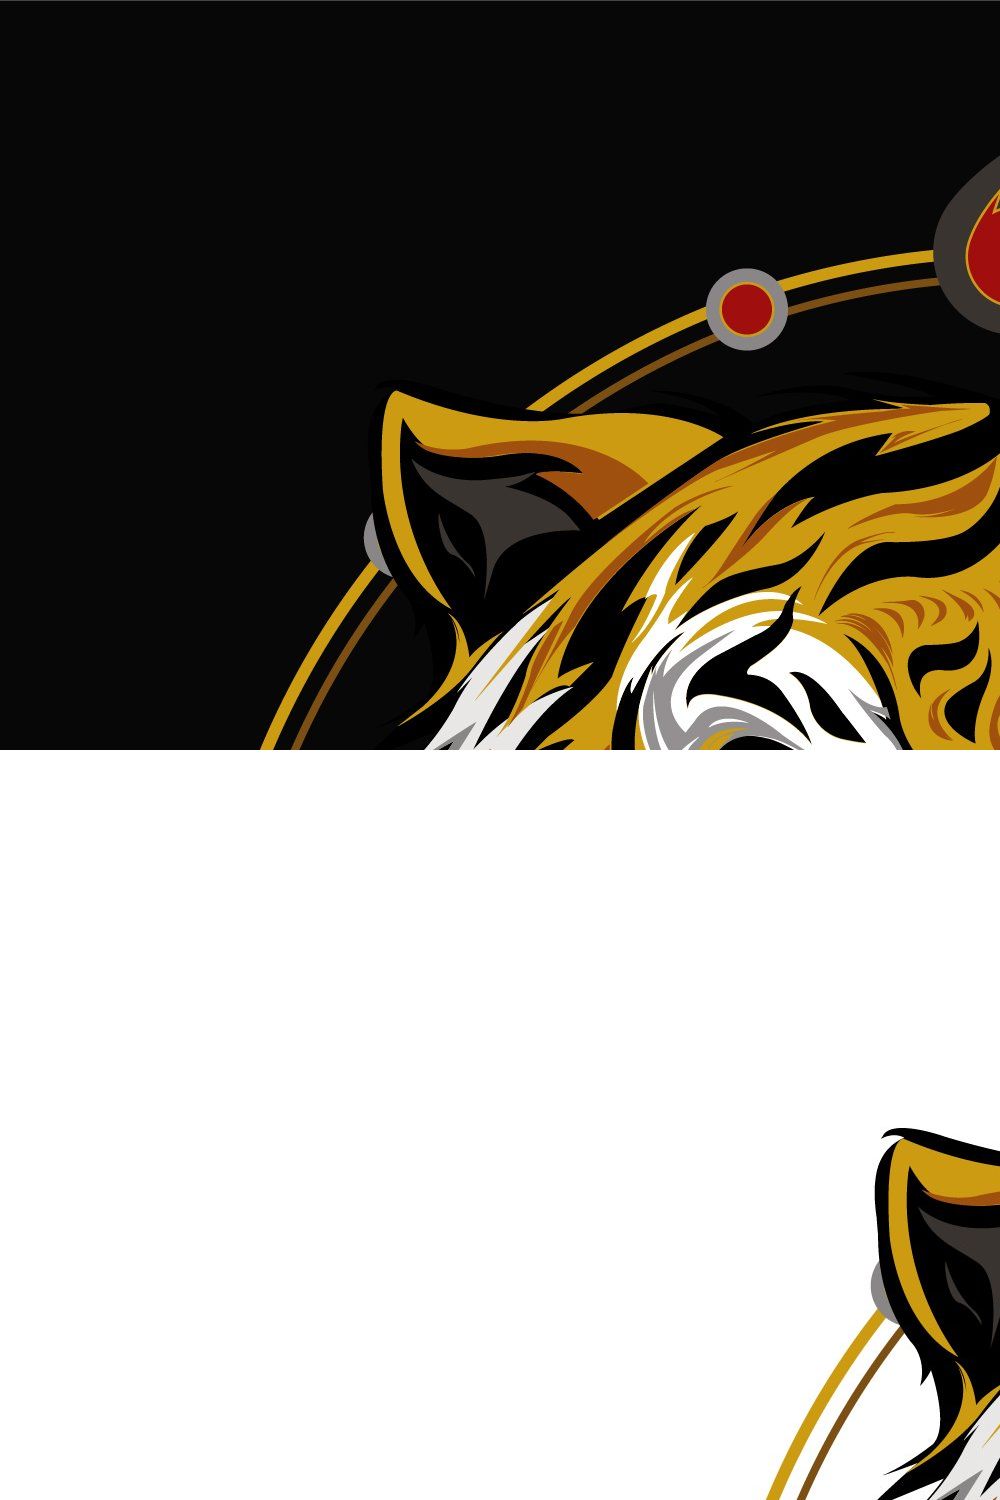 Tiger illustration logo with sacred pinterest preview image.